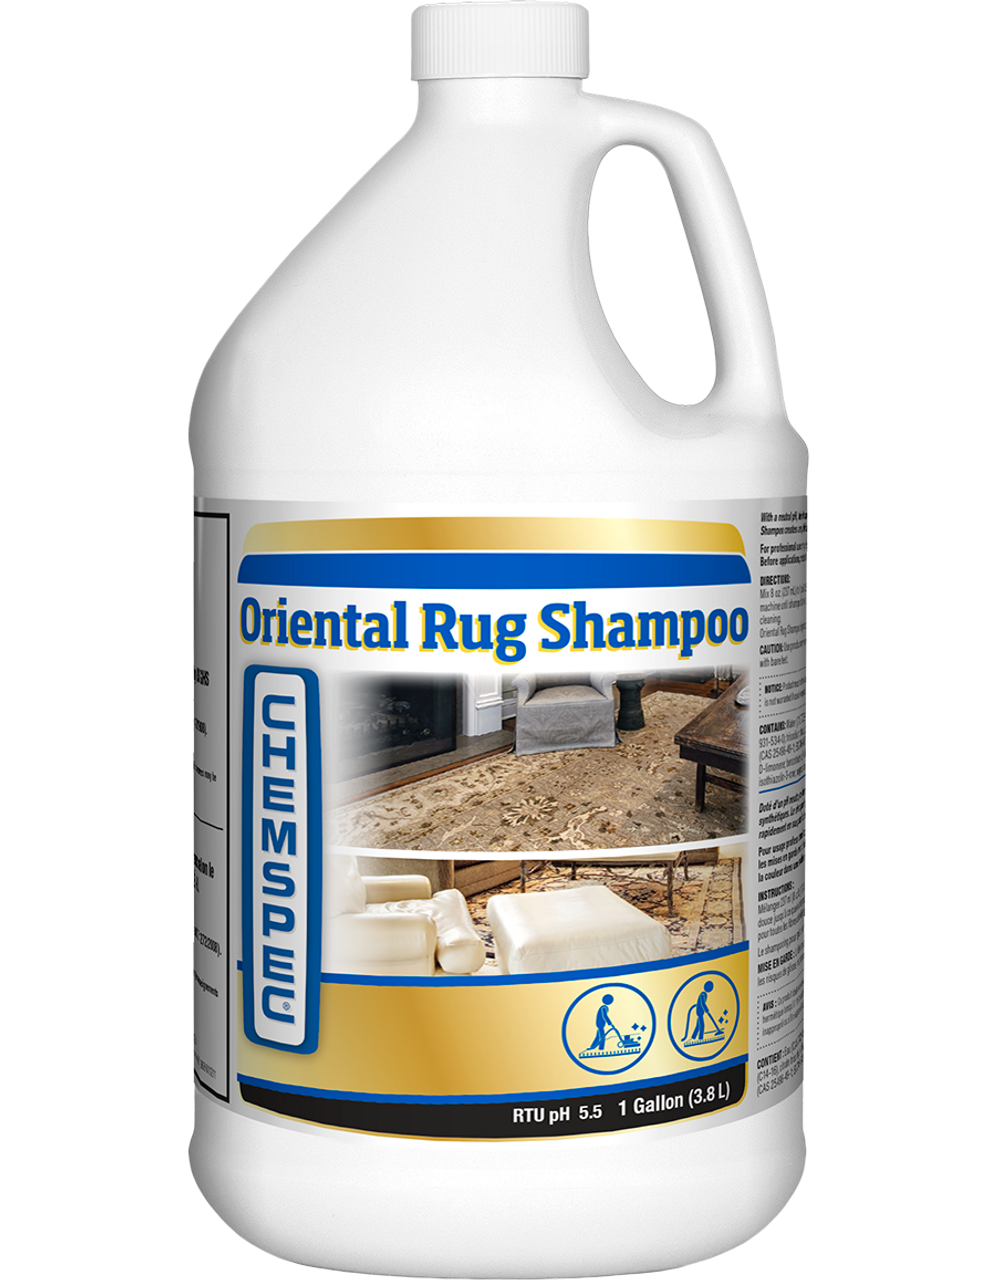 Chemspec Oriental Rug Shampoo - 1gal - CASE of 4ea